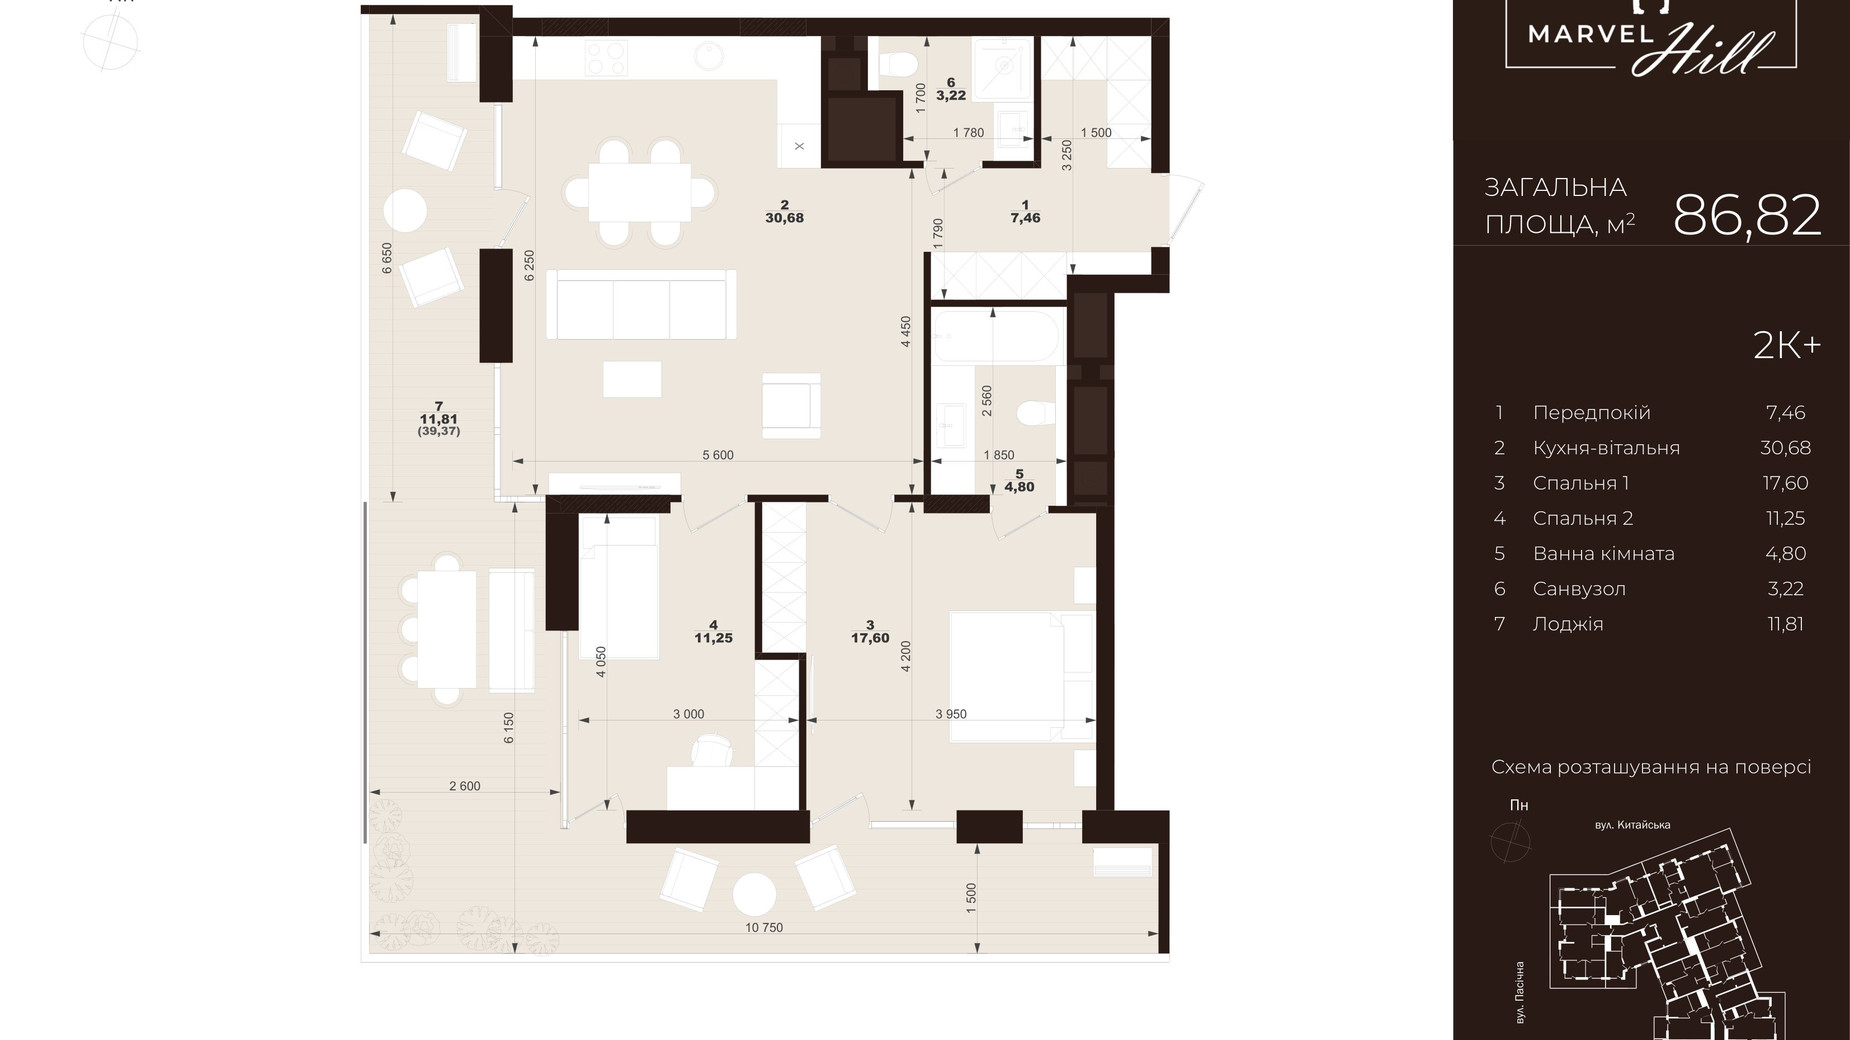 Планування 2-кімнатної квартири в ЖК Marvel Hill 86.82 м², фото 602103